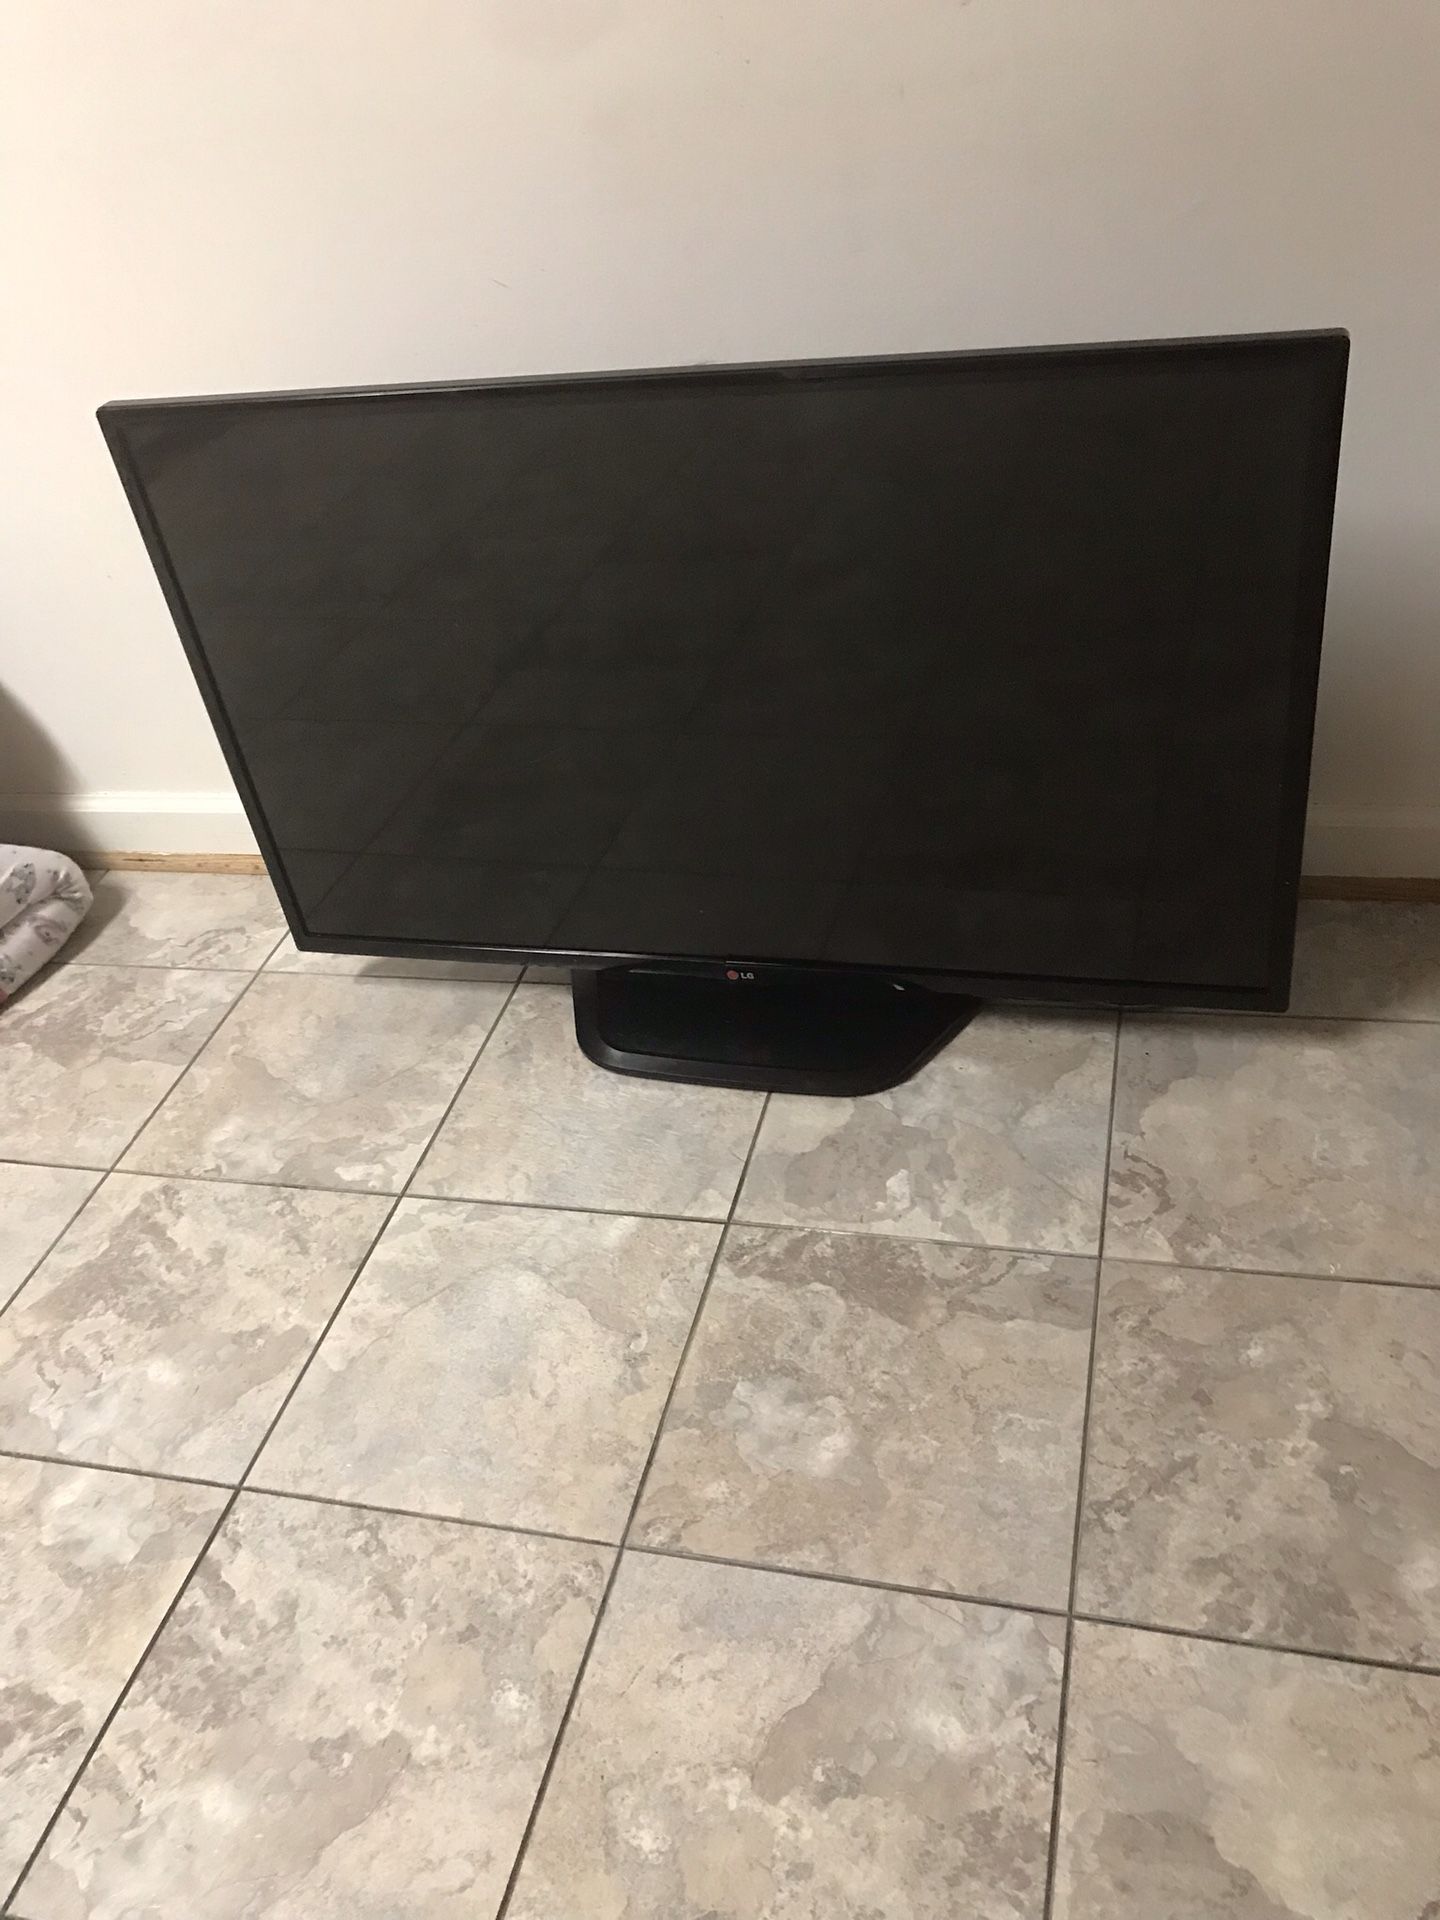 LG 37 inch flatscreen TV